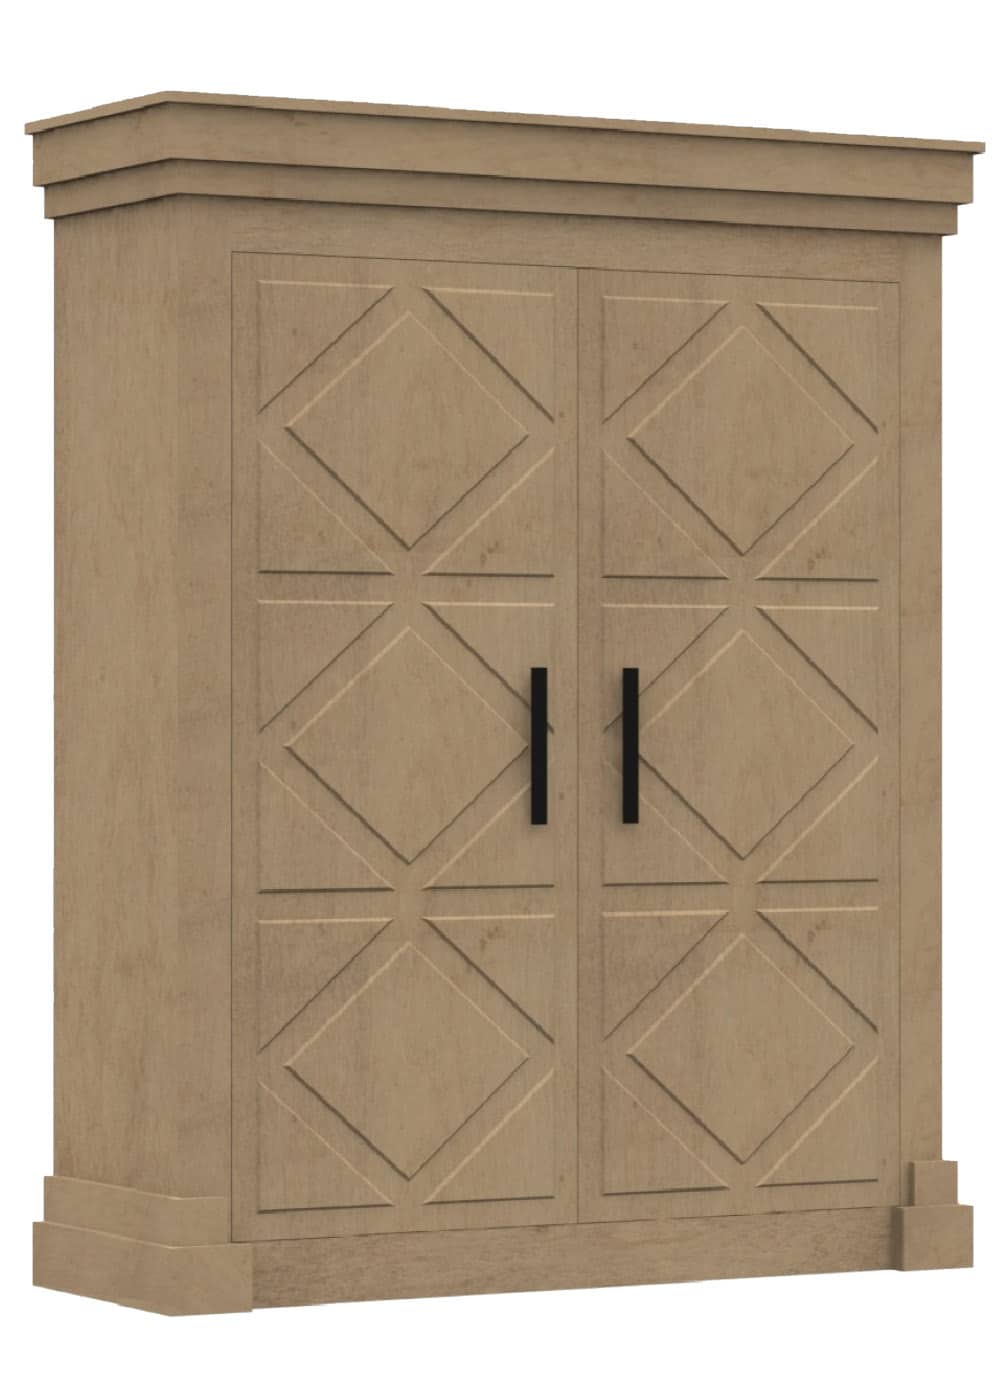 Edgemont Pantry Storage Refrigerator Cabinet with diamond detail pattern by Woodland furniture in Idaho Falls